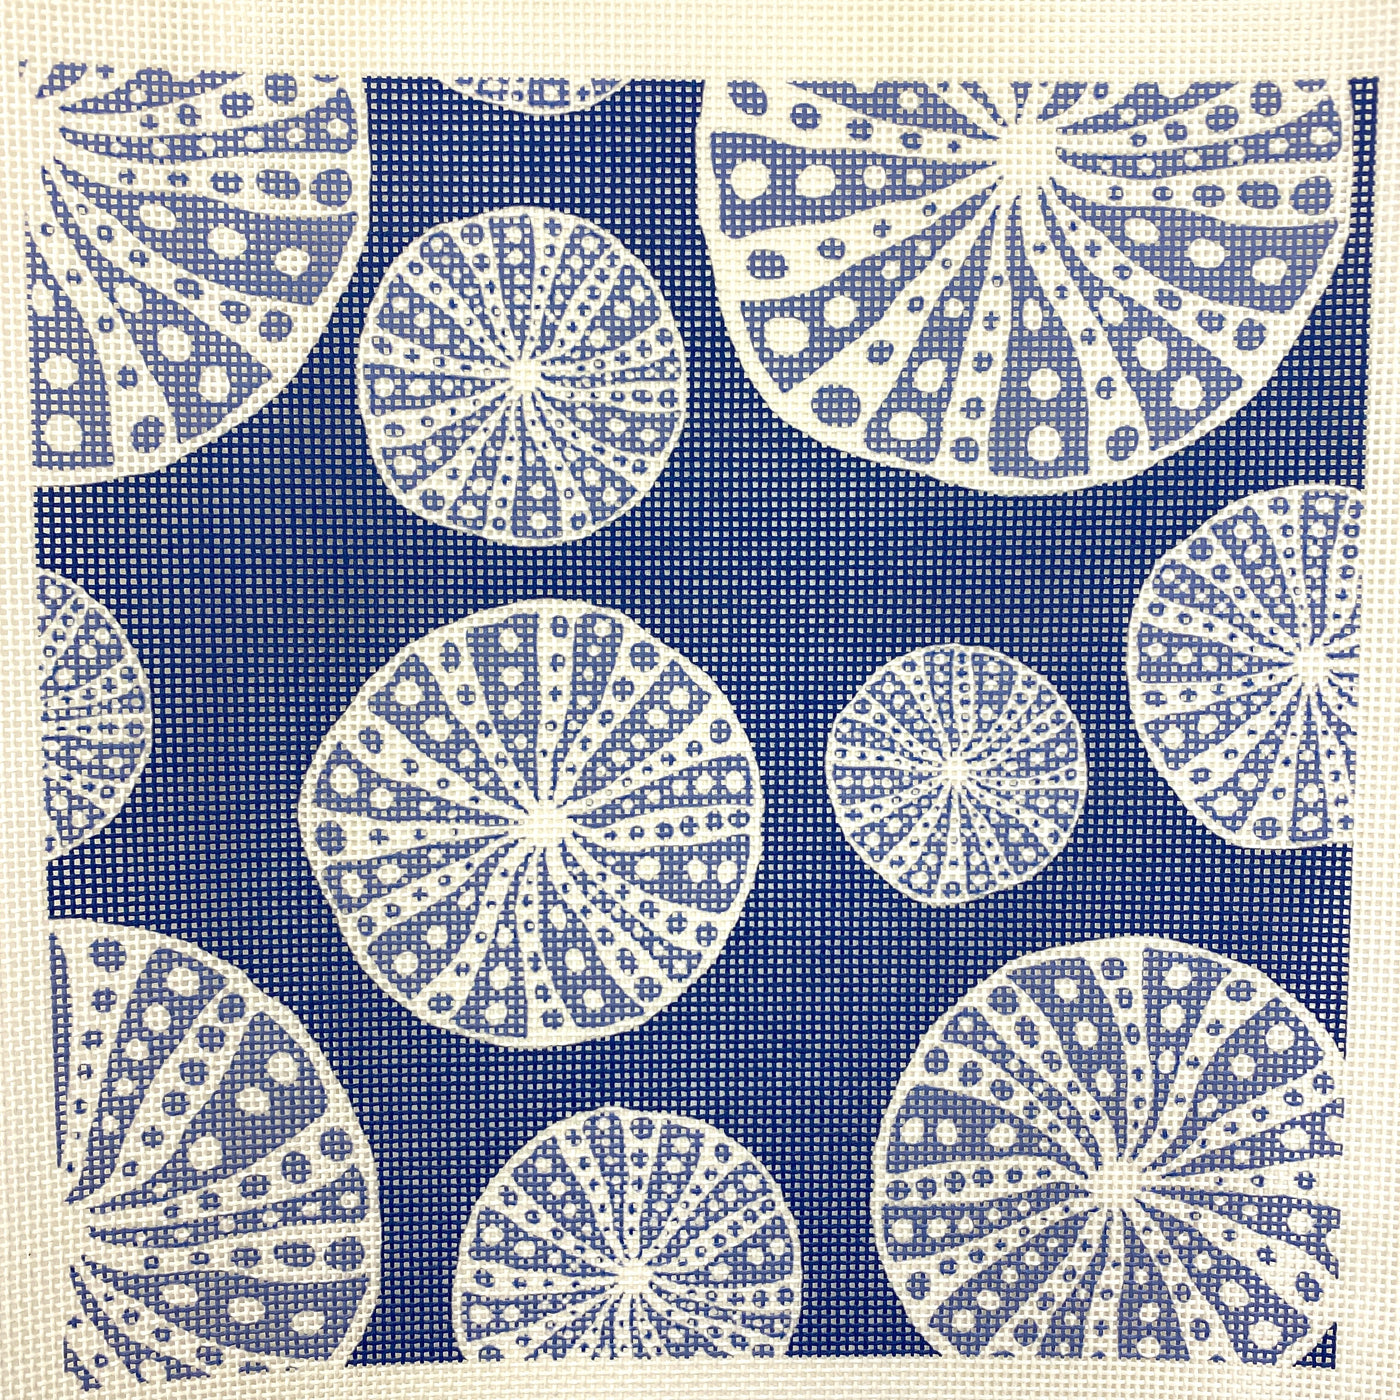 Blue Urchins Needlepoint Canvas